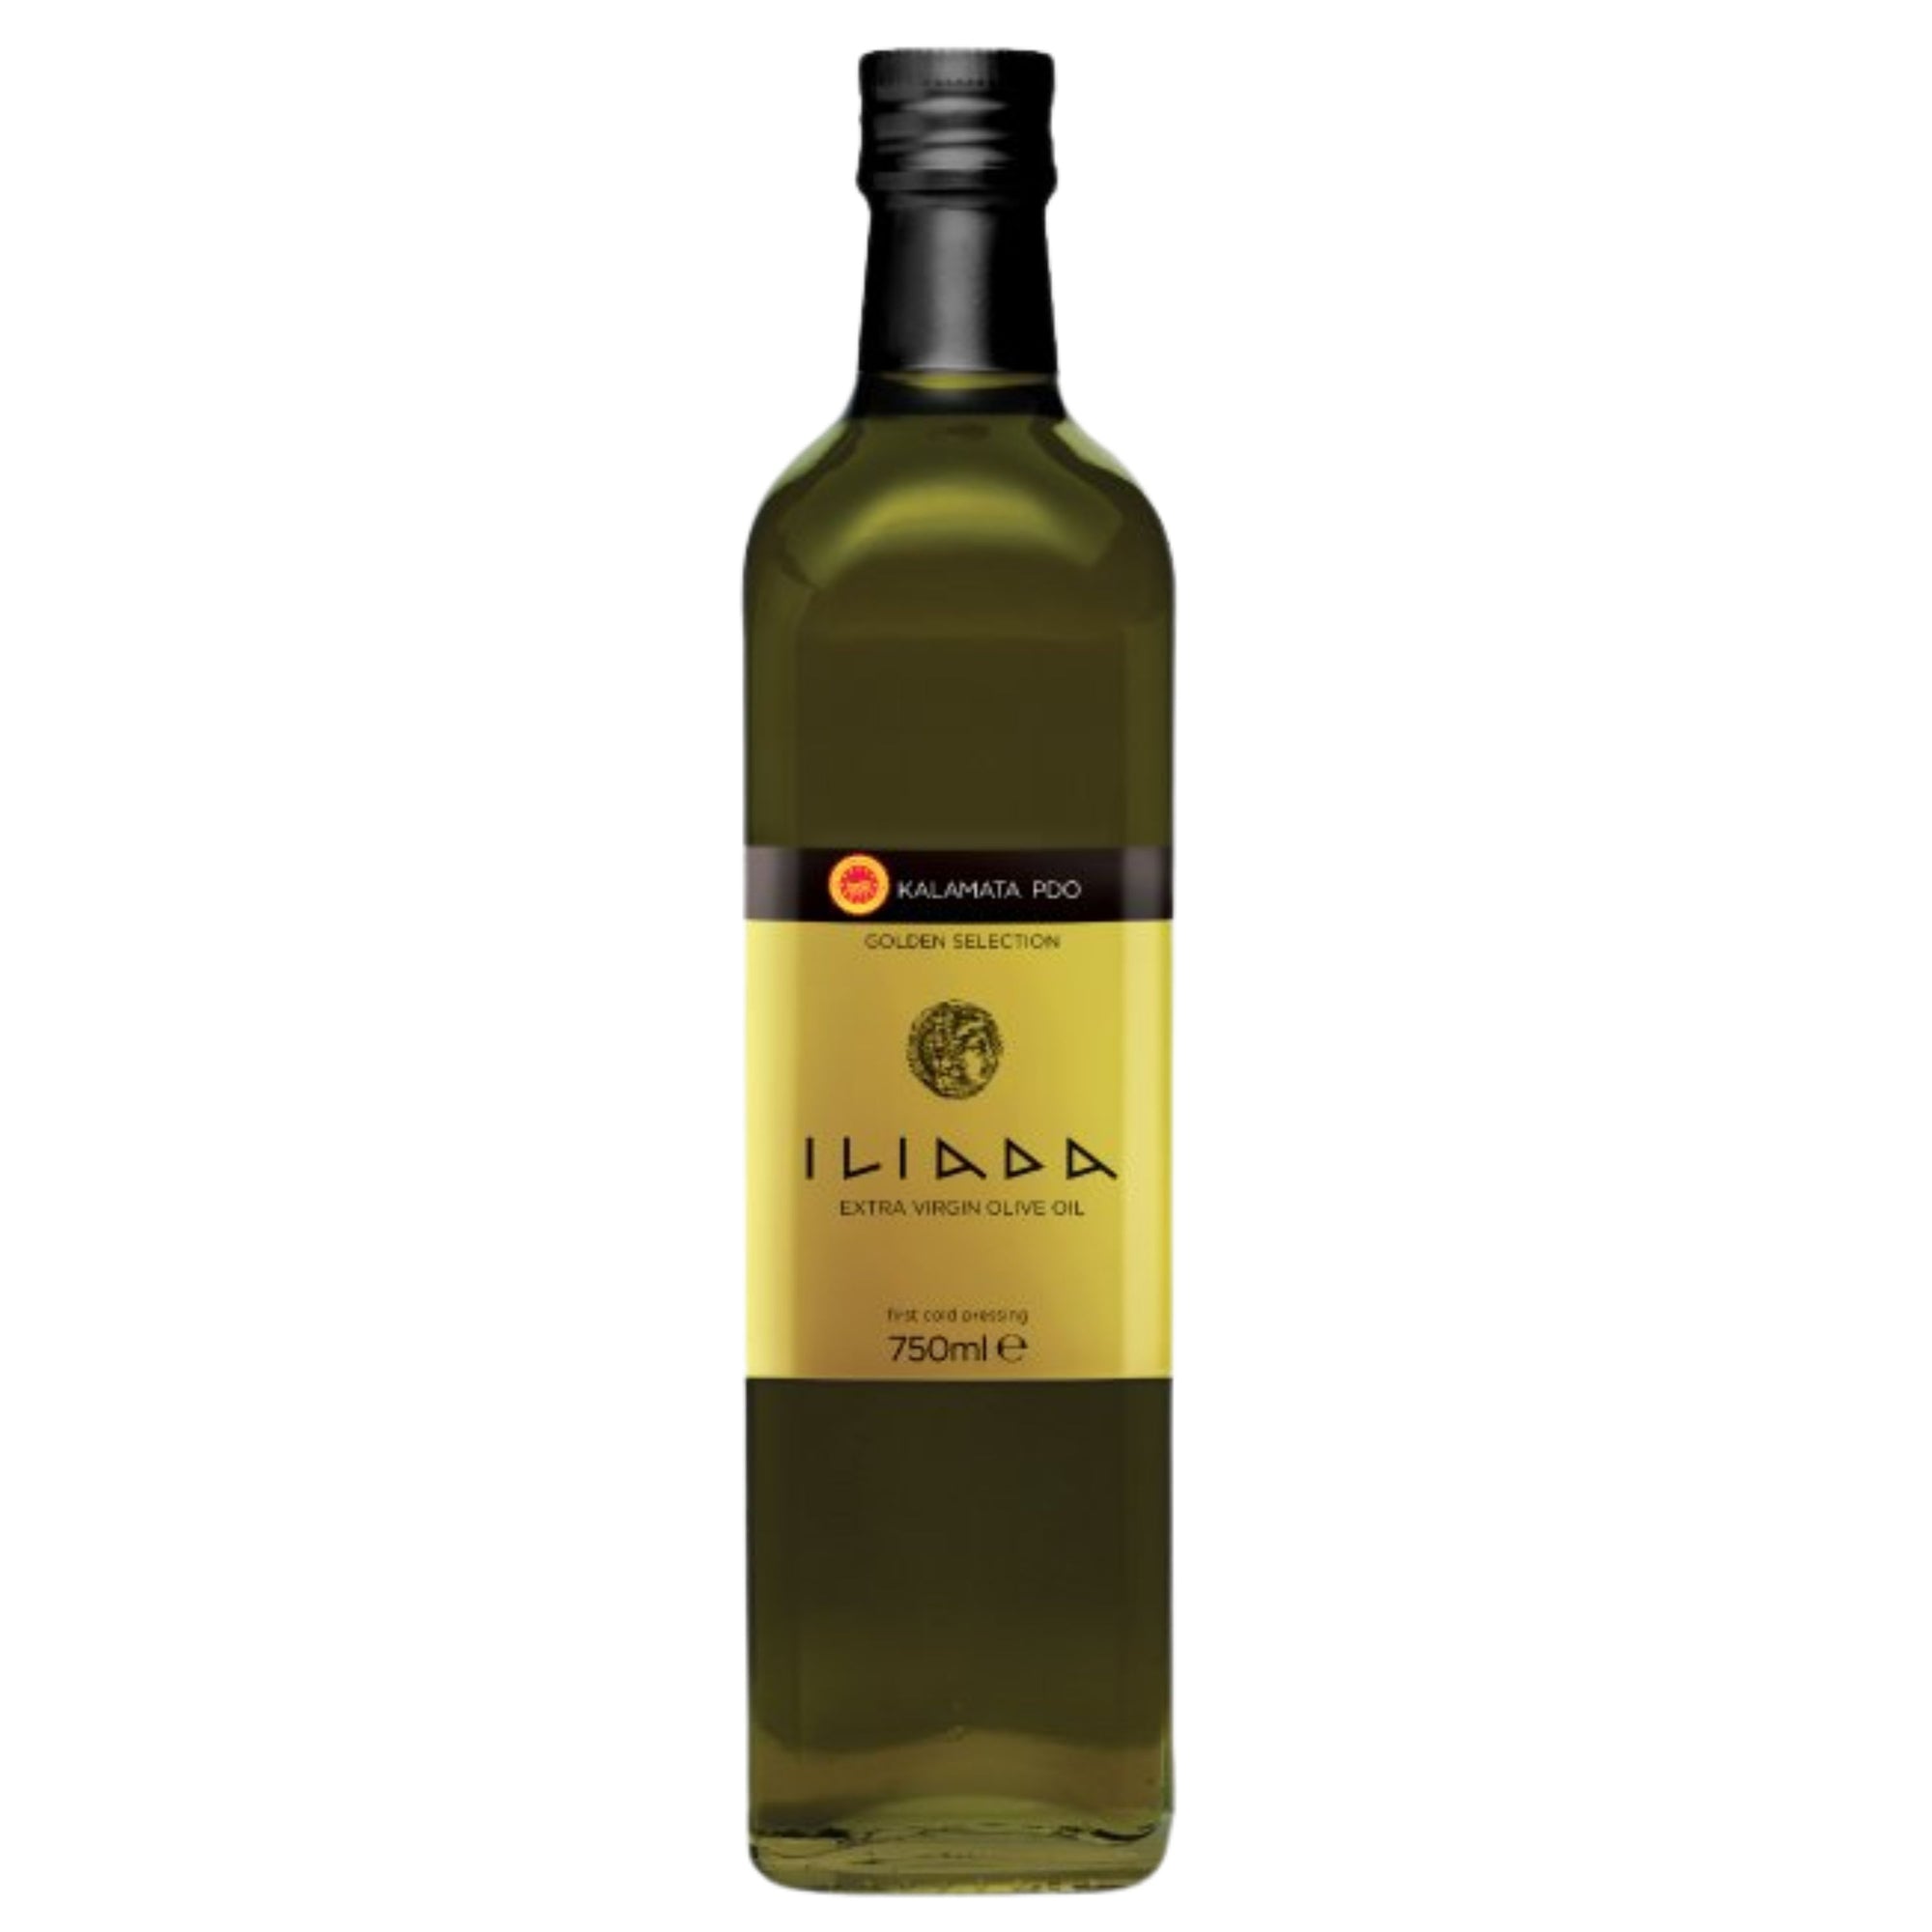 Extra Virgin Olive Oil Kalamata PDO 'Iliada' 750ml bottle